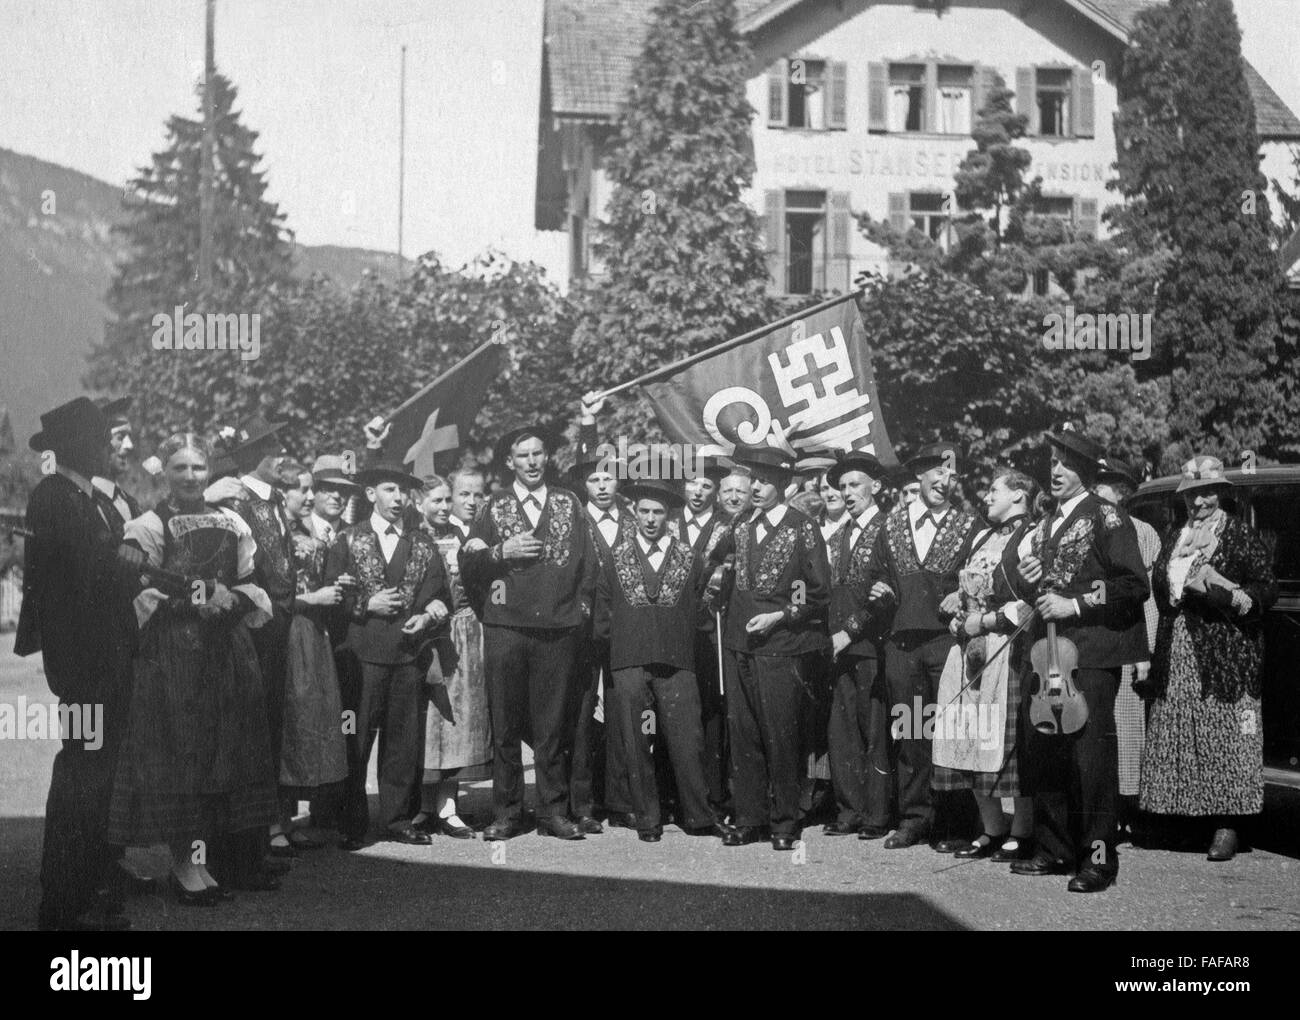 Die Mitglieder des Jodlerklubs à Stans im Kanton Nidwalden bringen ein Ständchen, Schweiz 1930er Jahre. Les membres du club à yodeler Stans Stans, Suisse canton Nidwald en 1930. Banque D'Images